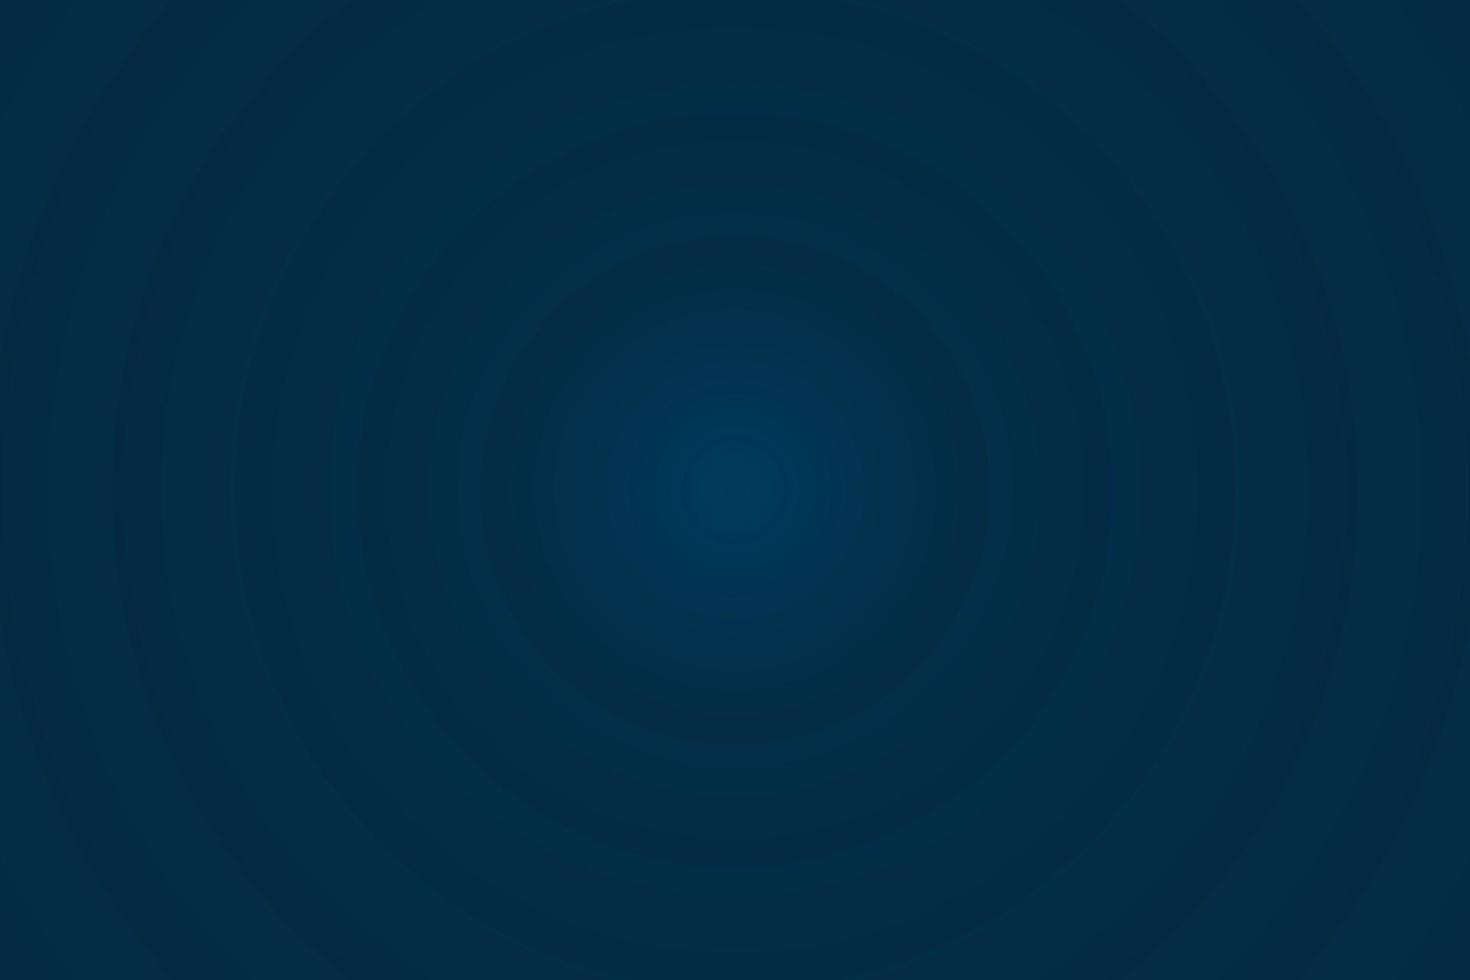 Blank dark blue circle shape abstract background, vector illustration